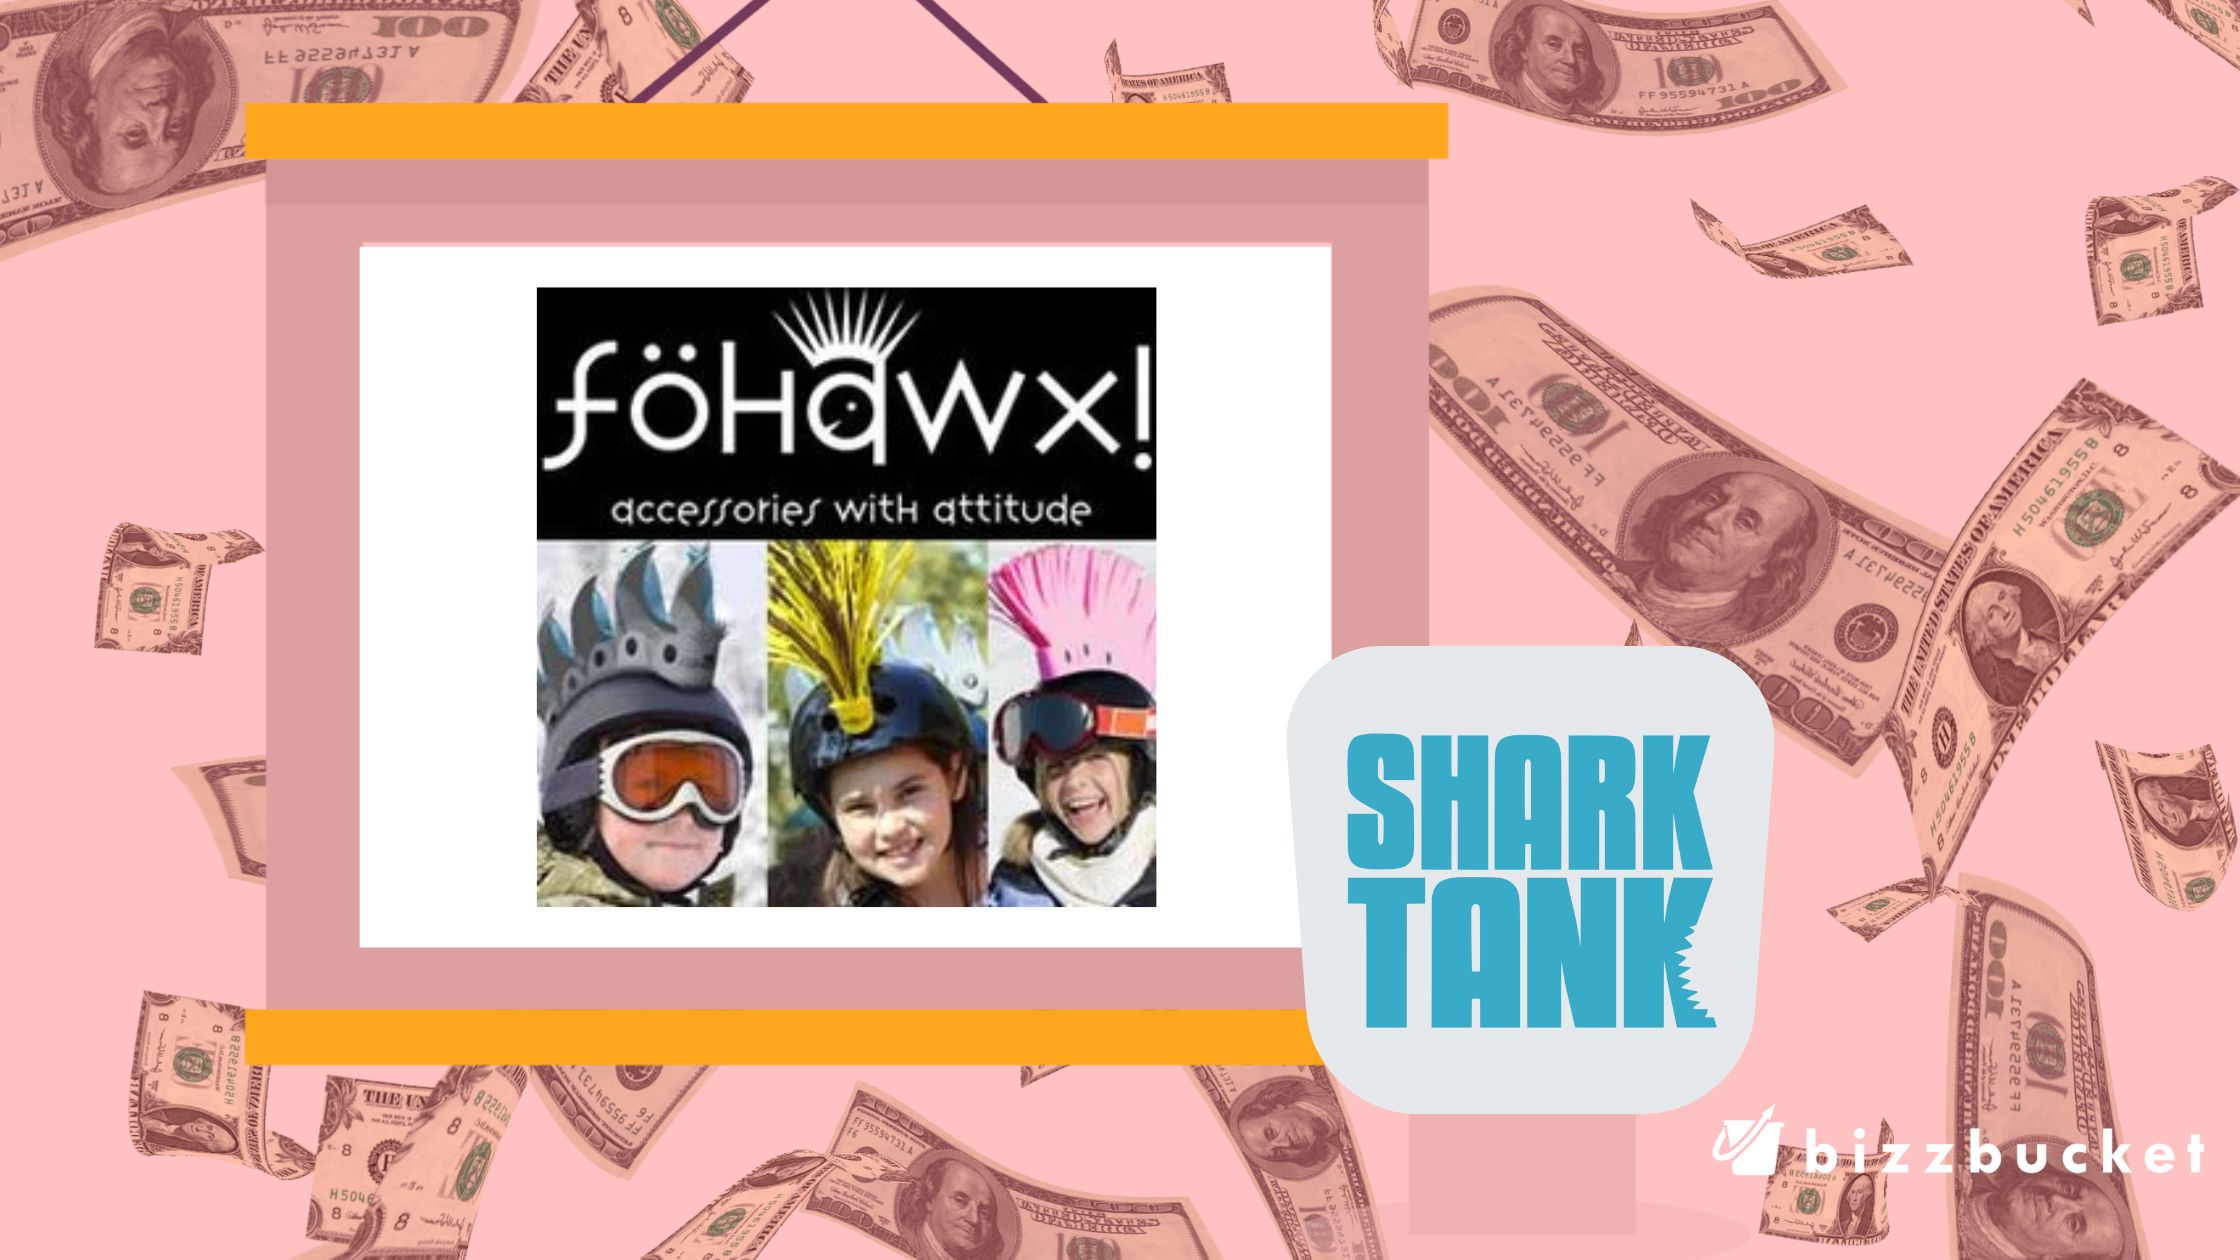 FoHawx shark tank update